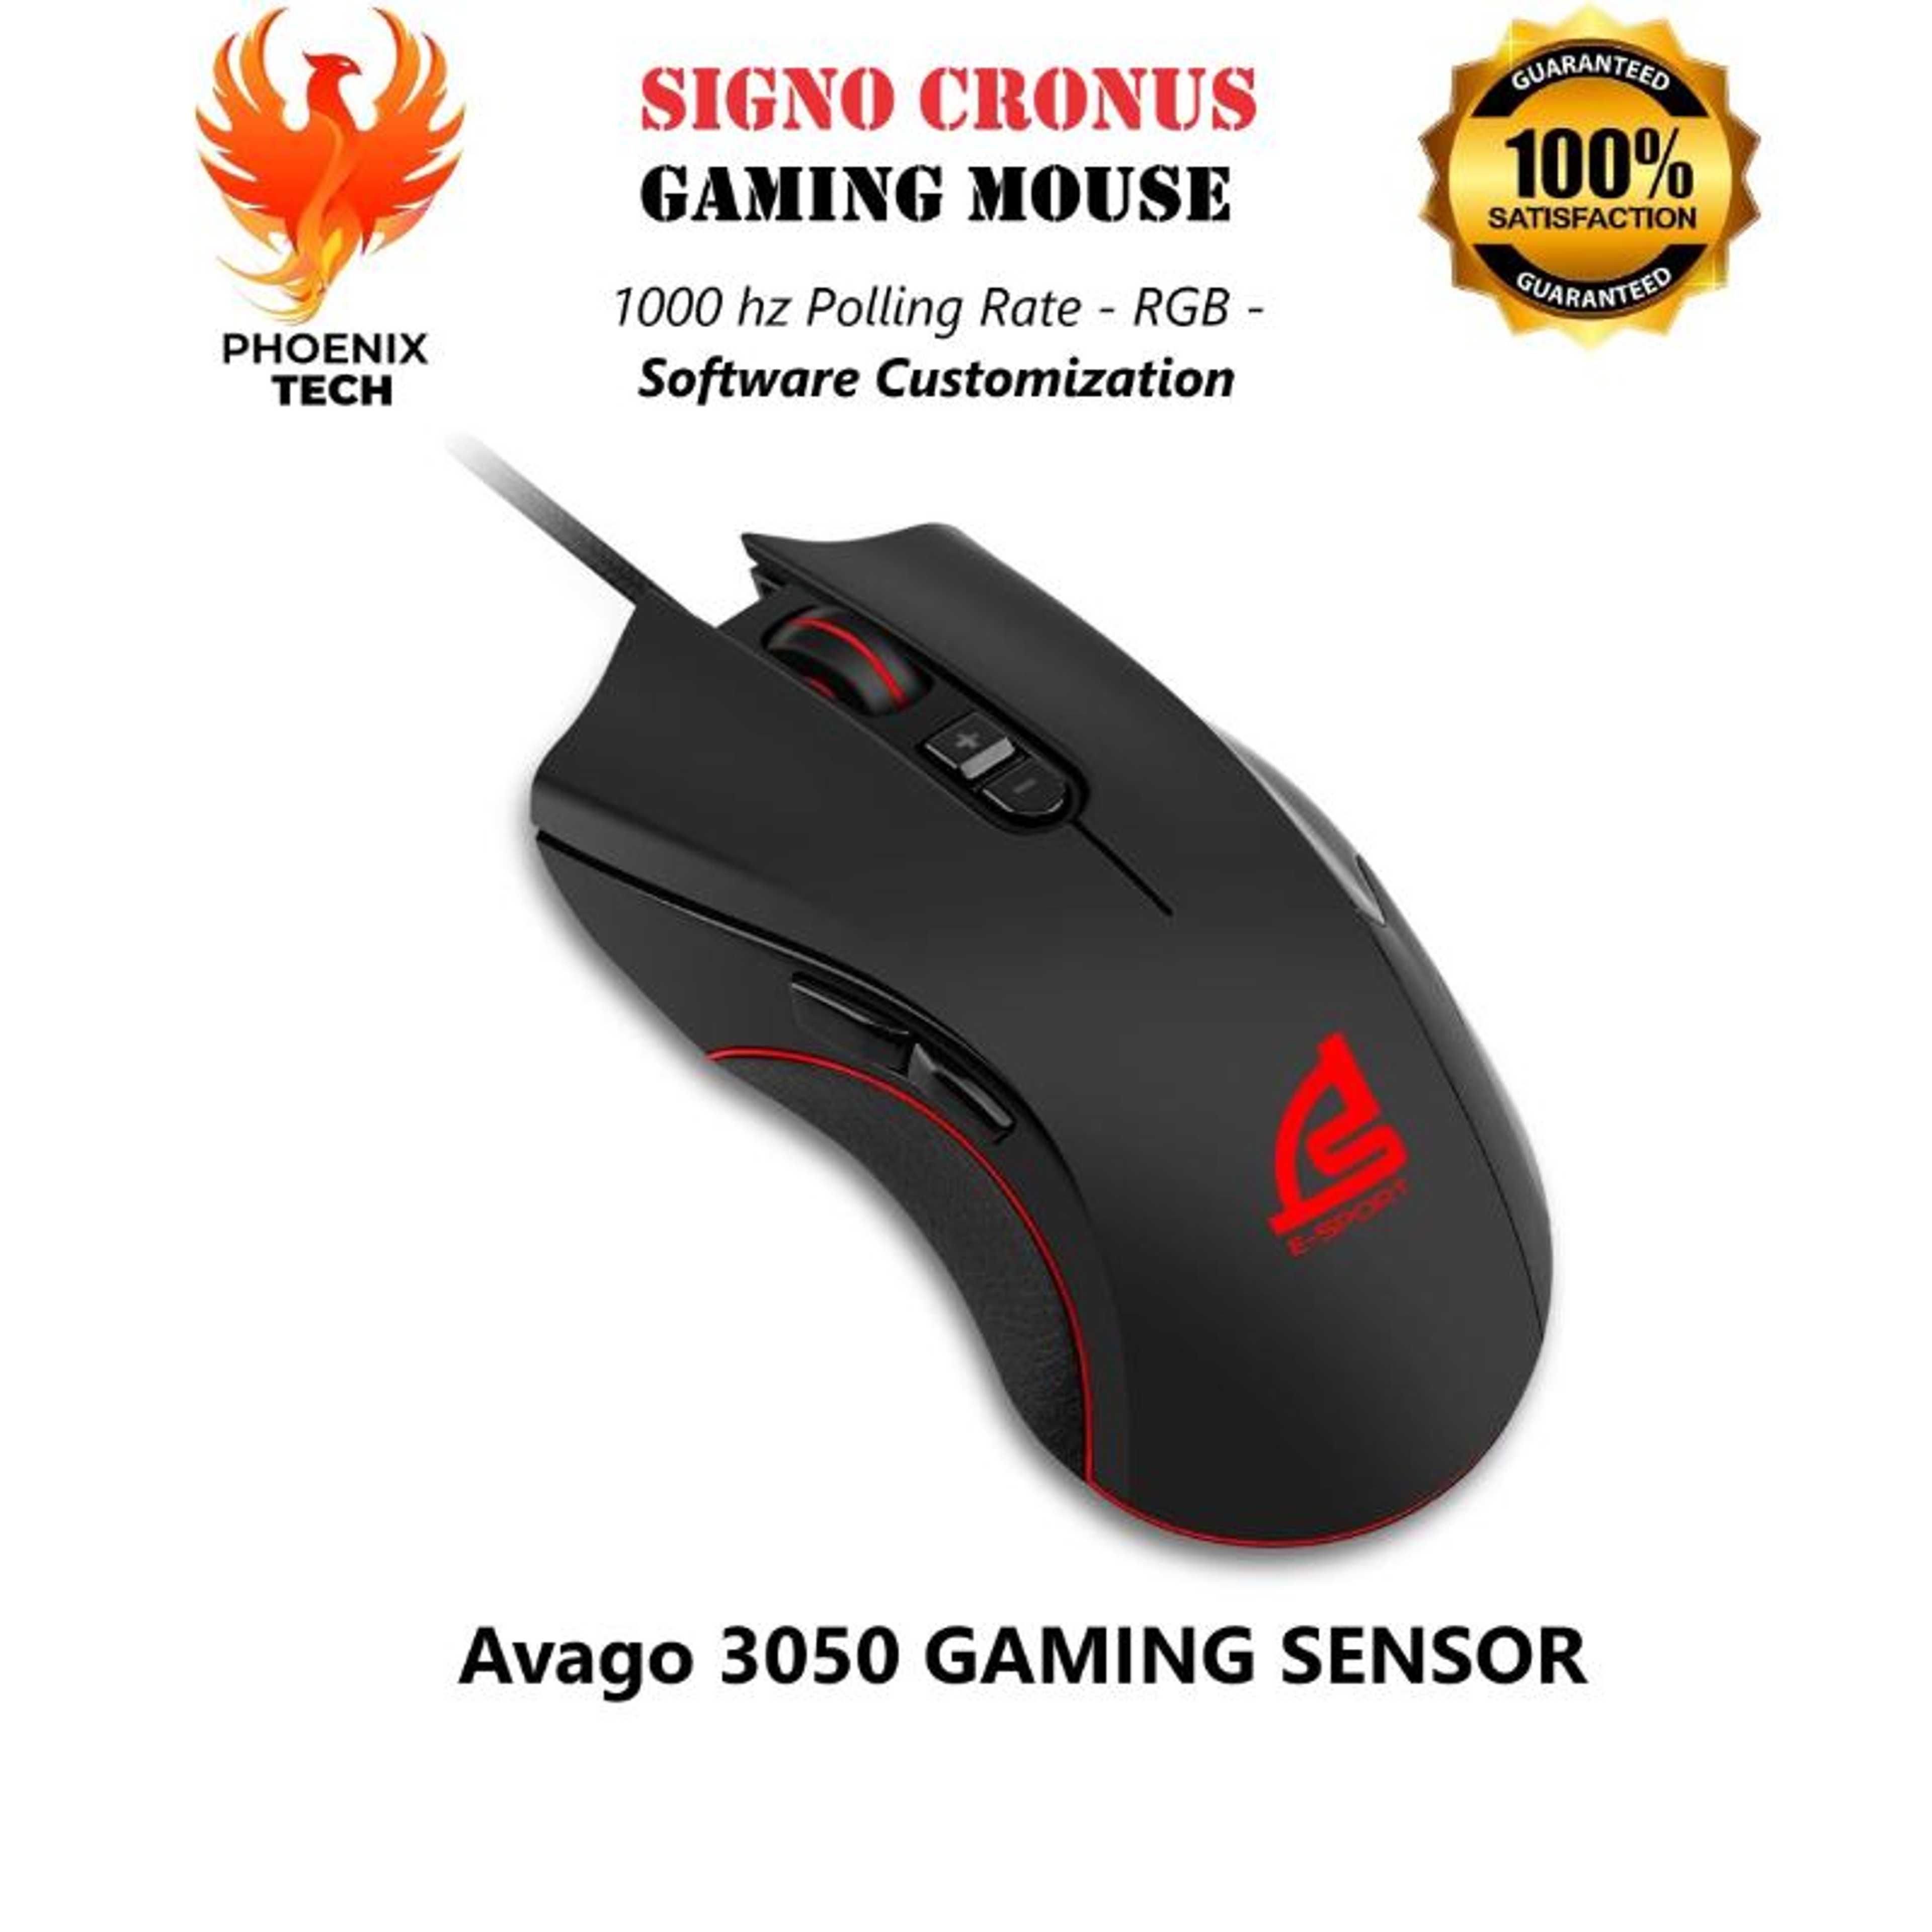 SIGNO Cronus USB Gaming Mouse Wired Ergonomic Design 16.8 Million RGB Lighting Real 1000-4000 DPI 6 Programmable Bottons PC And MAC For Windows 7/8/10/VISTA (GM-990)